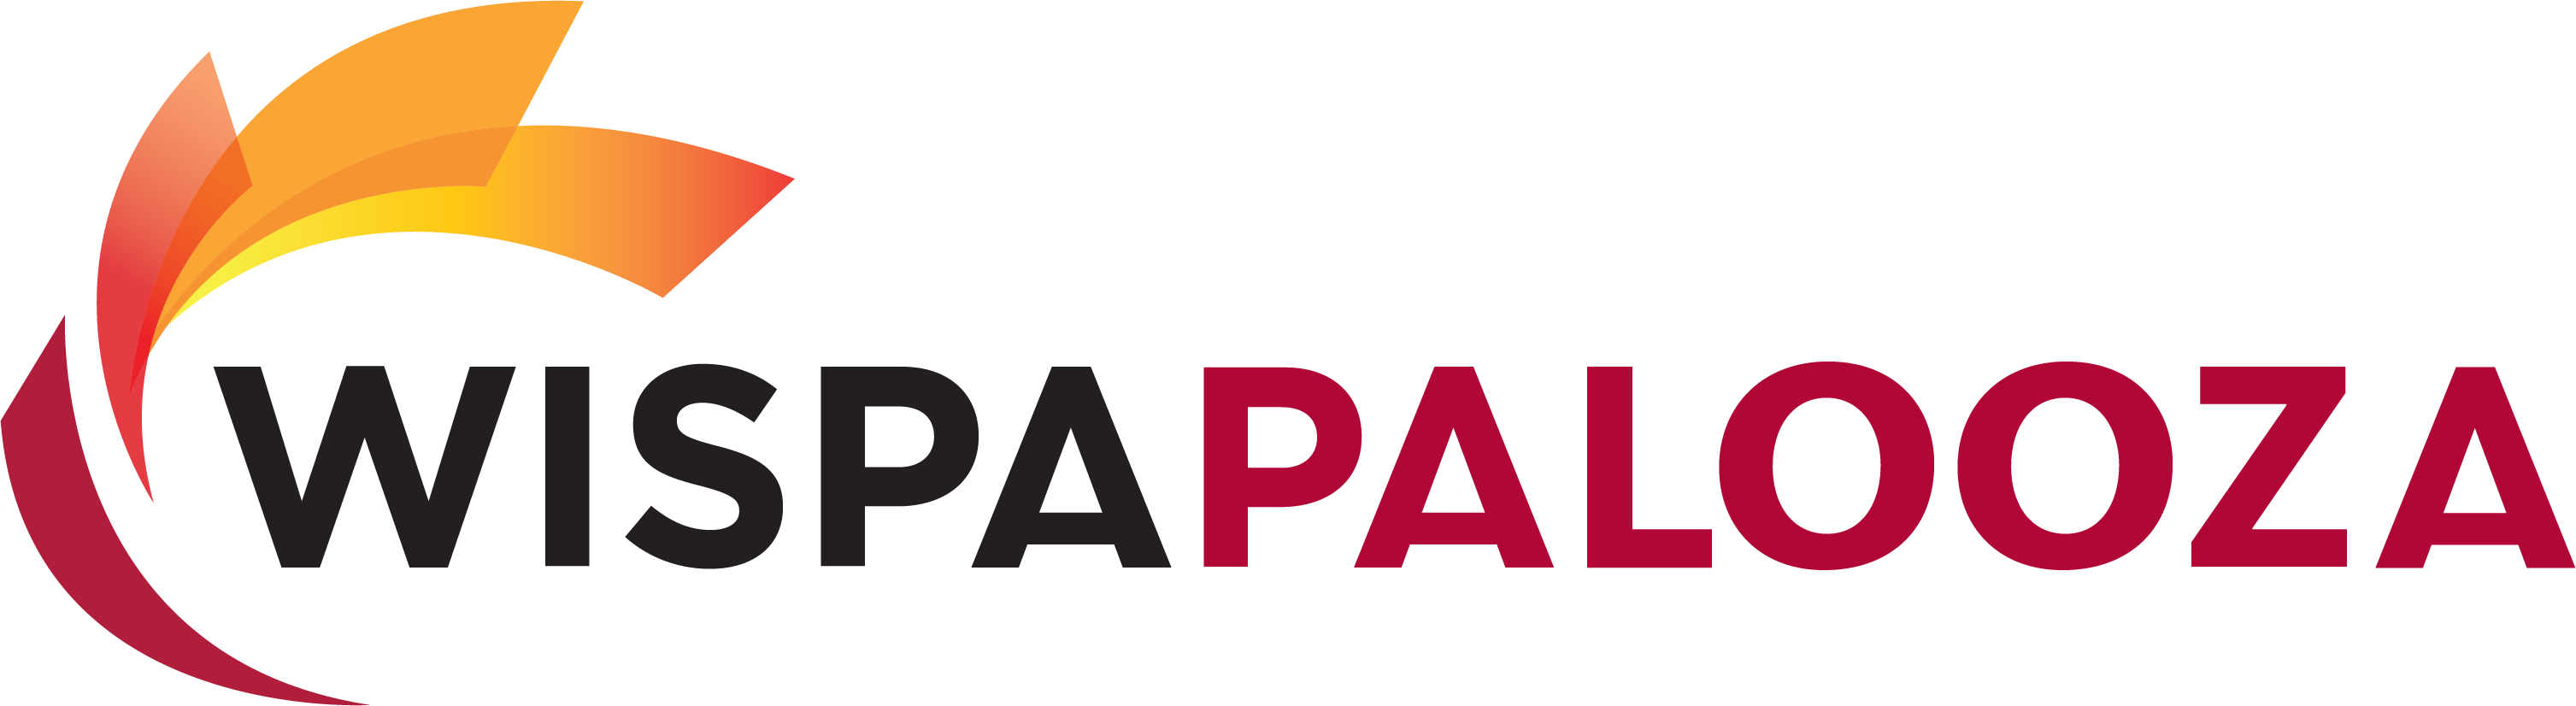 wi-papalooza_logo